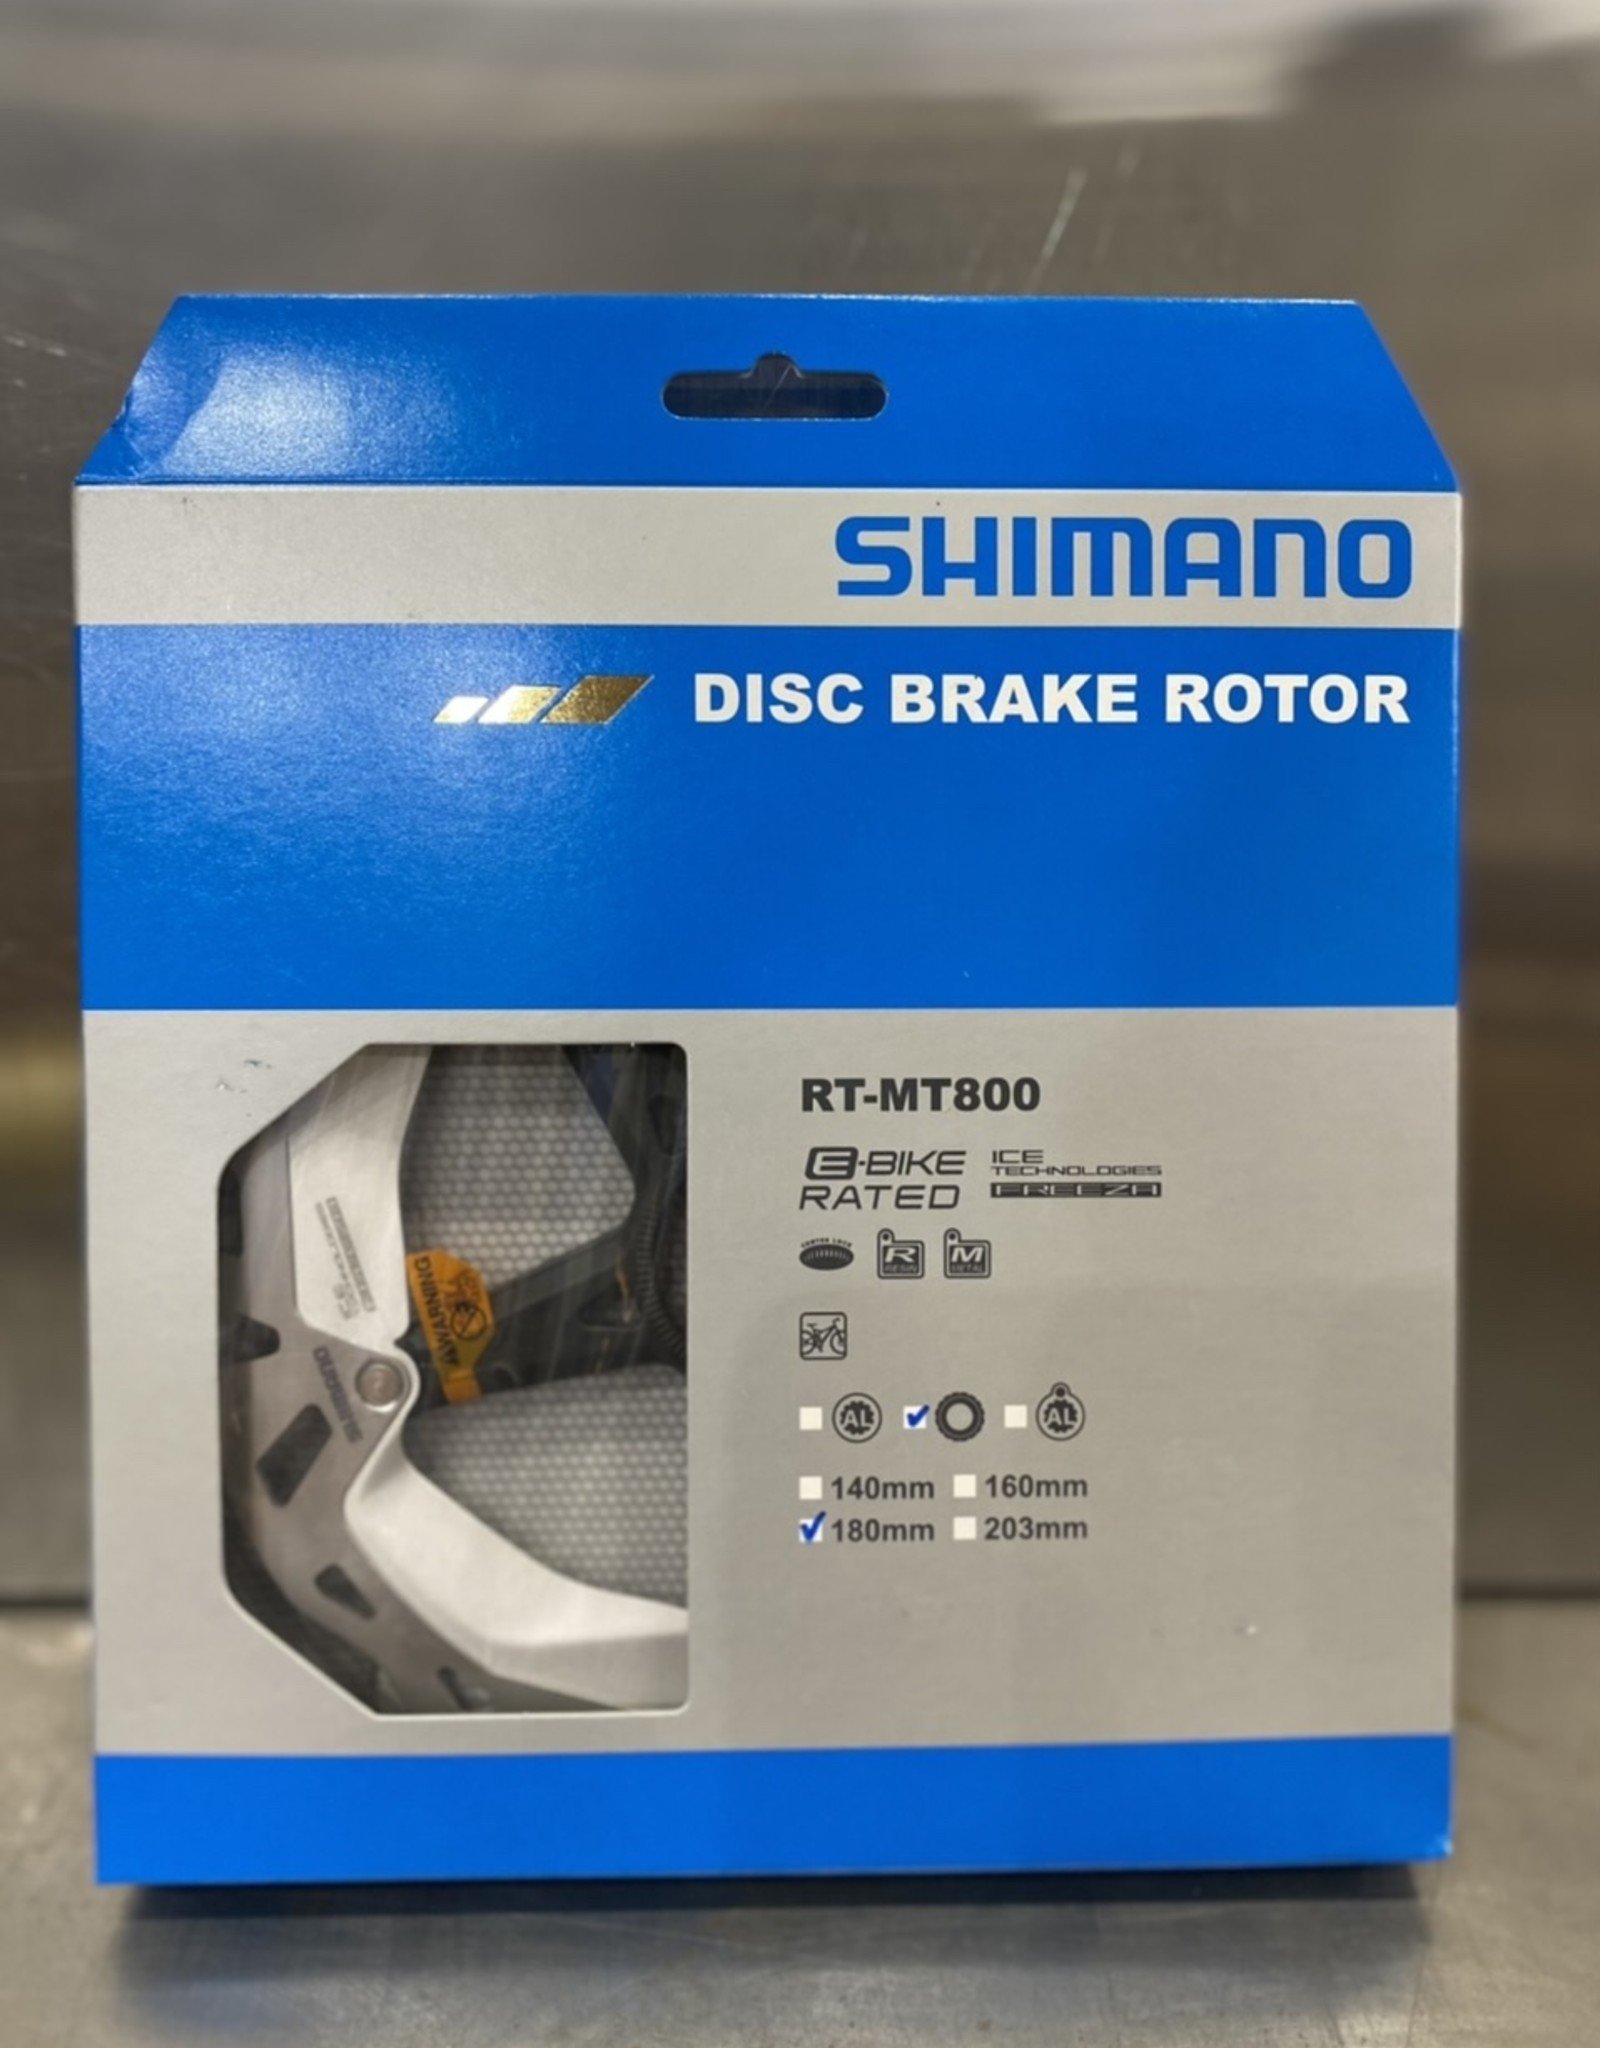 Shimano ROTOR FOR DISC BRAKE, RT-MT800, M 180MM, W/LOCK RING